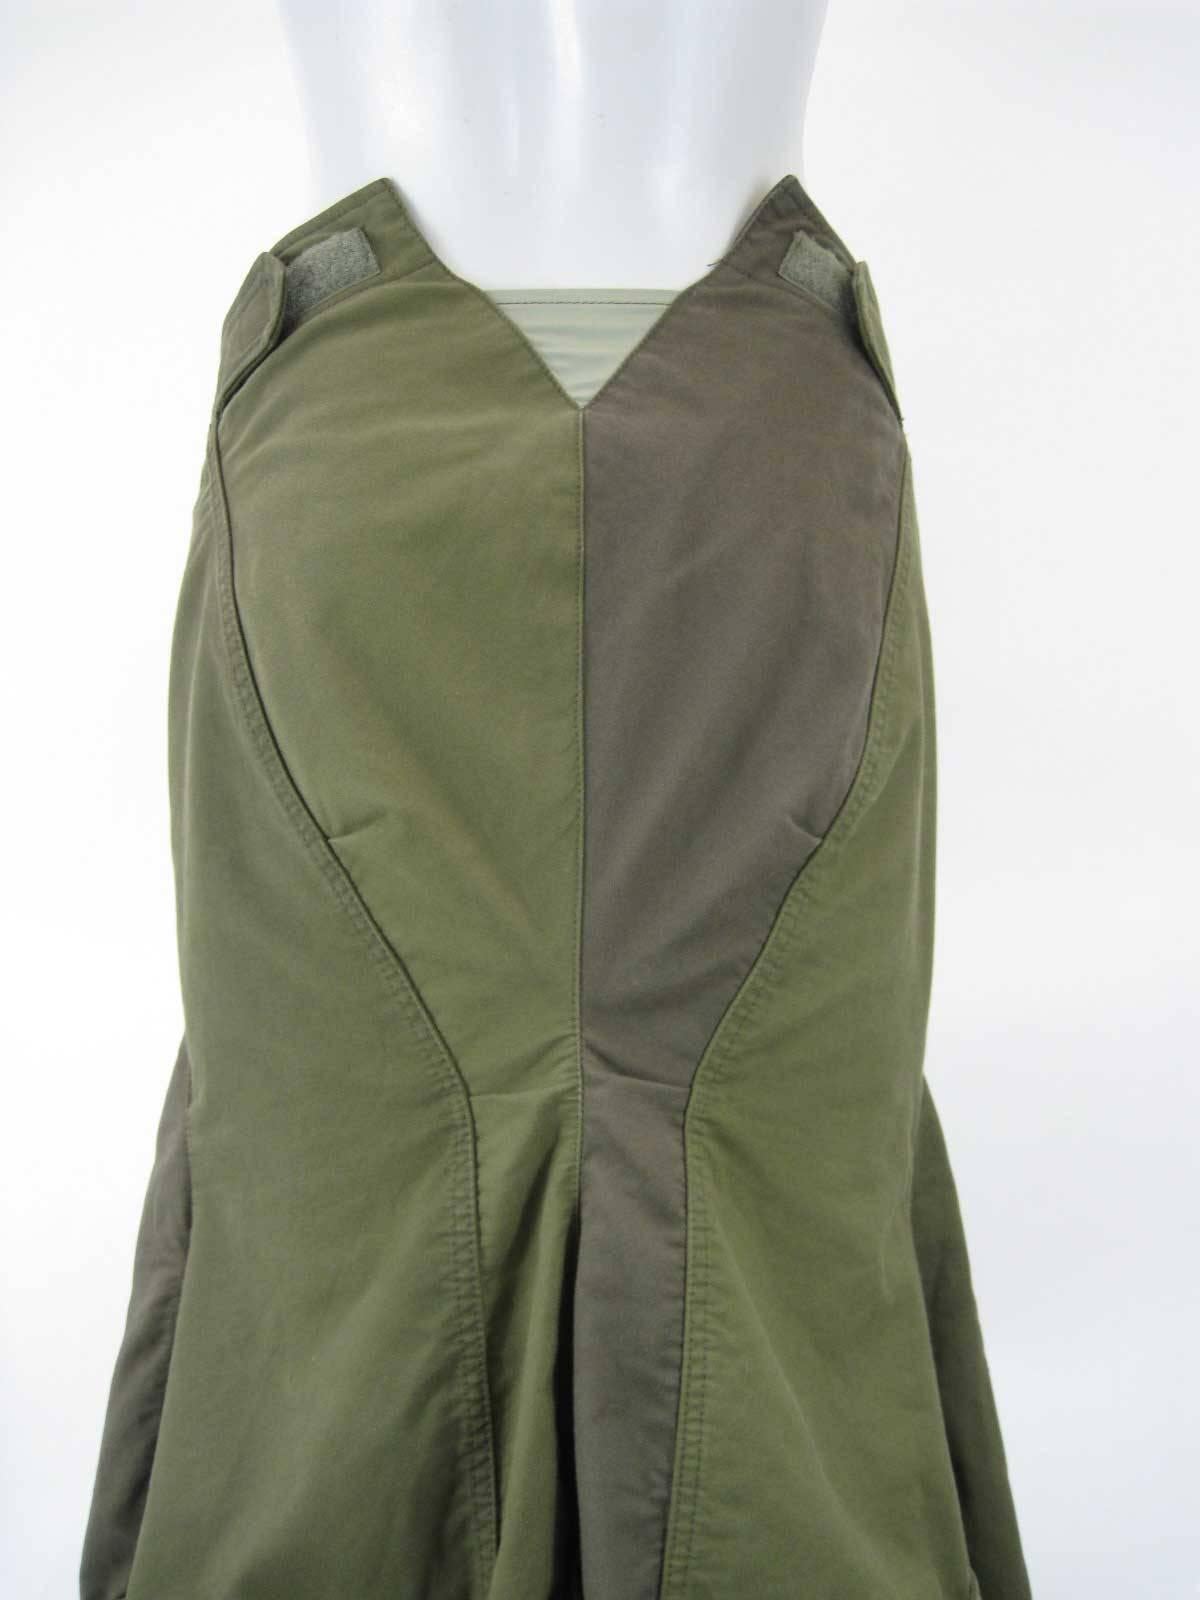 Black Junya Watanabe Commes des Garcons 2006 Deconstructed Military Skirt